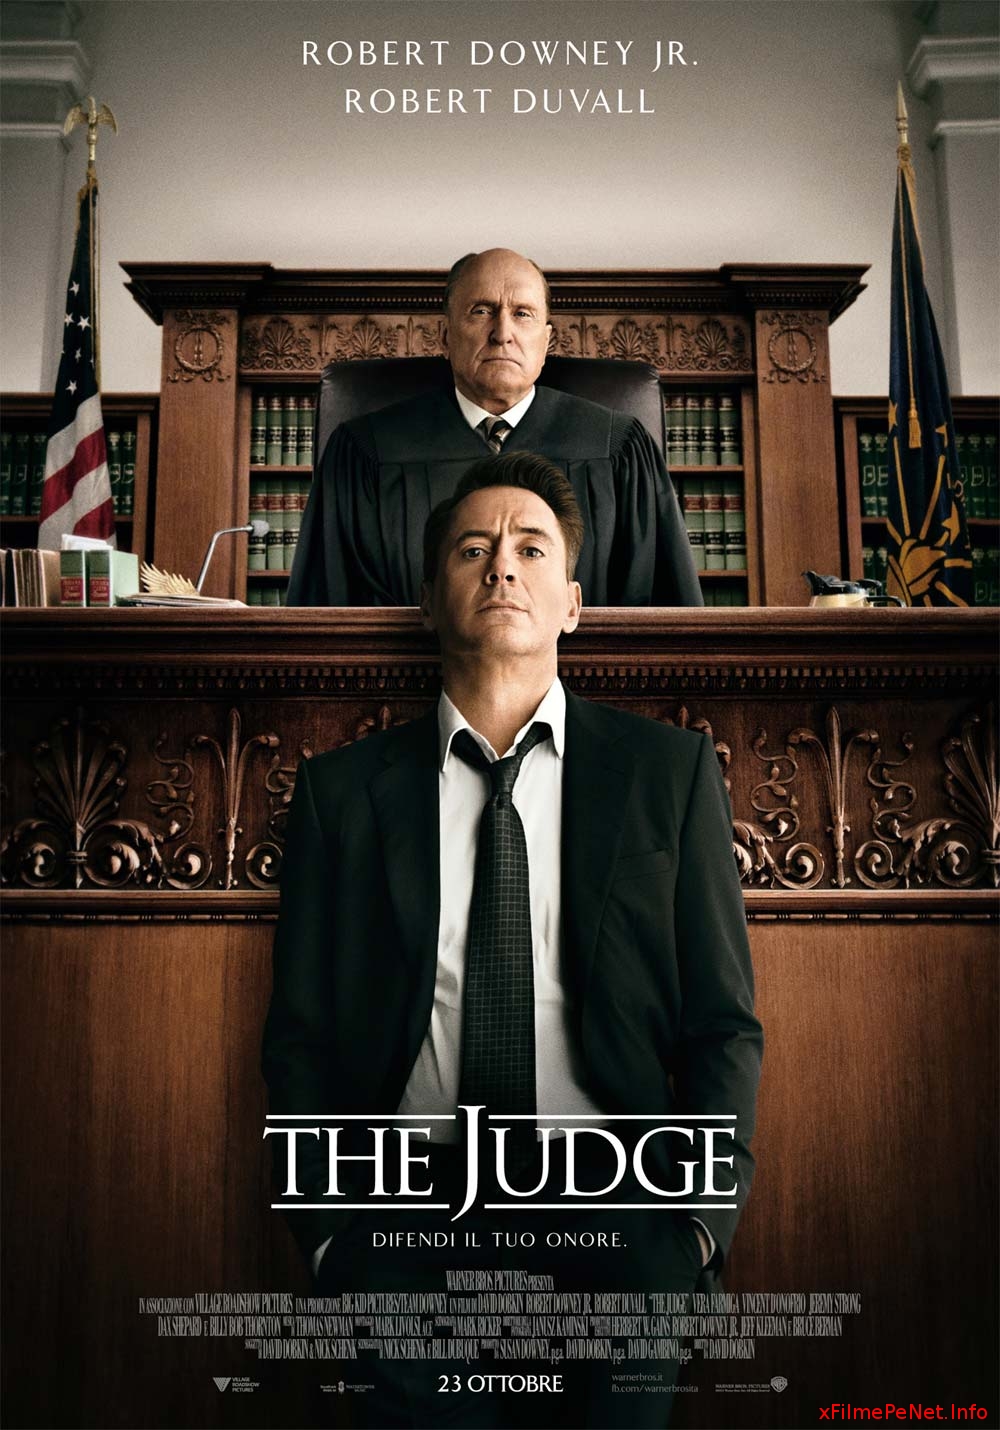 The Judge - Judecătorul (2014) online subtitrat